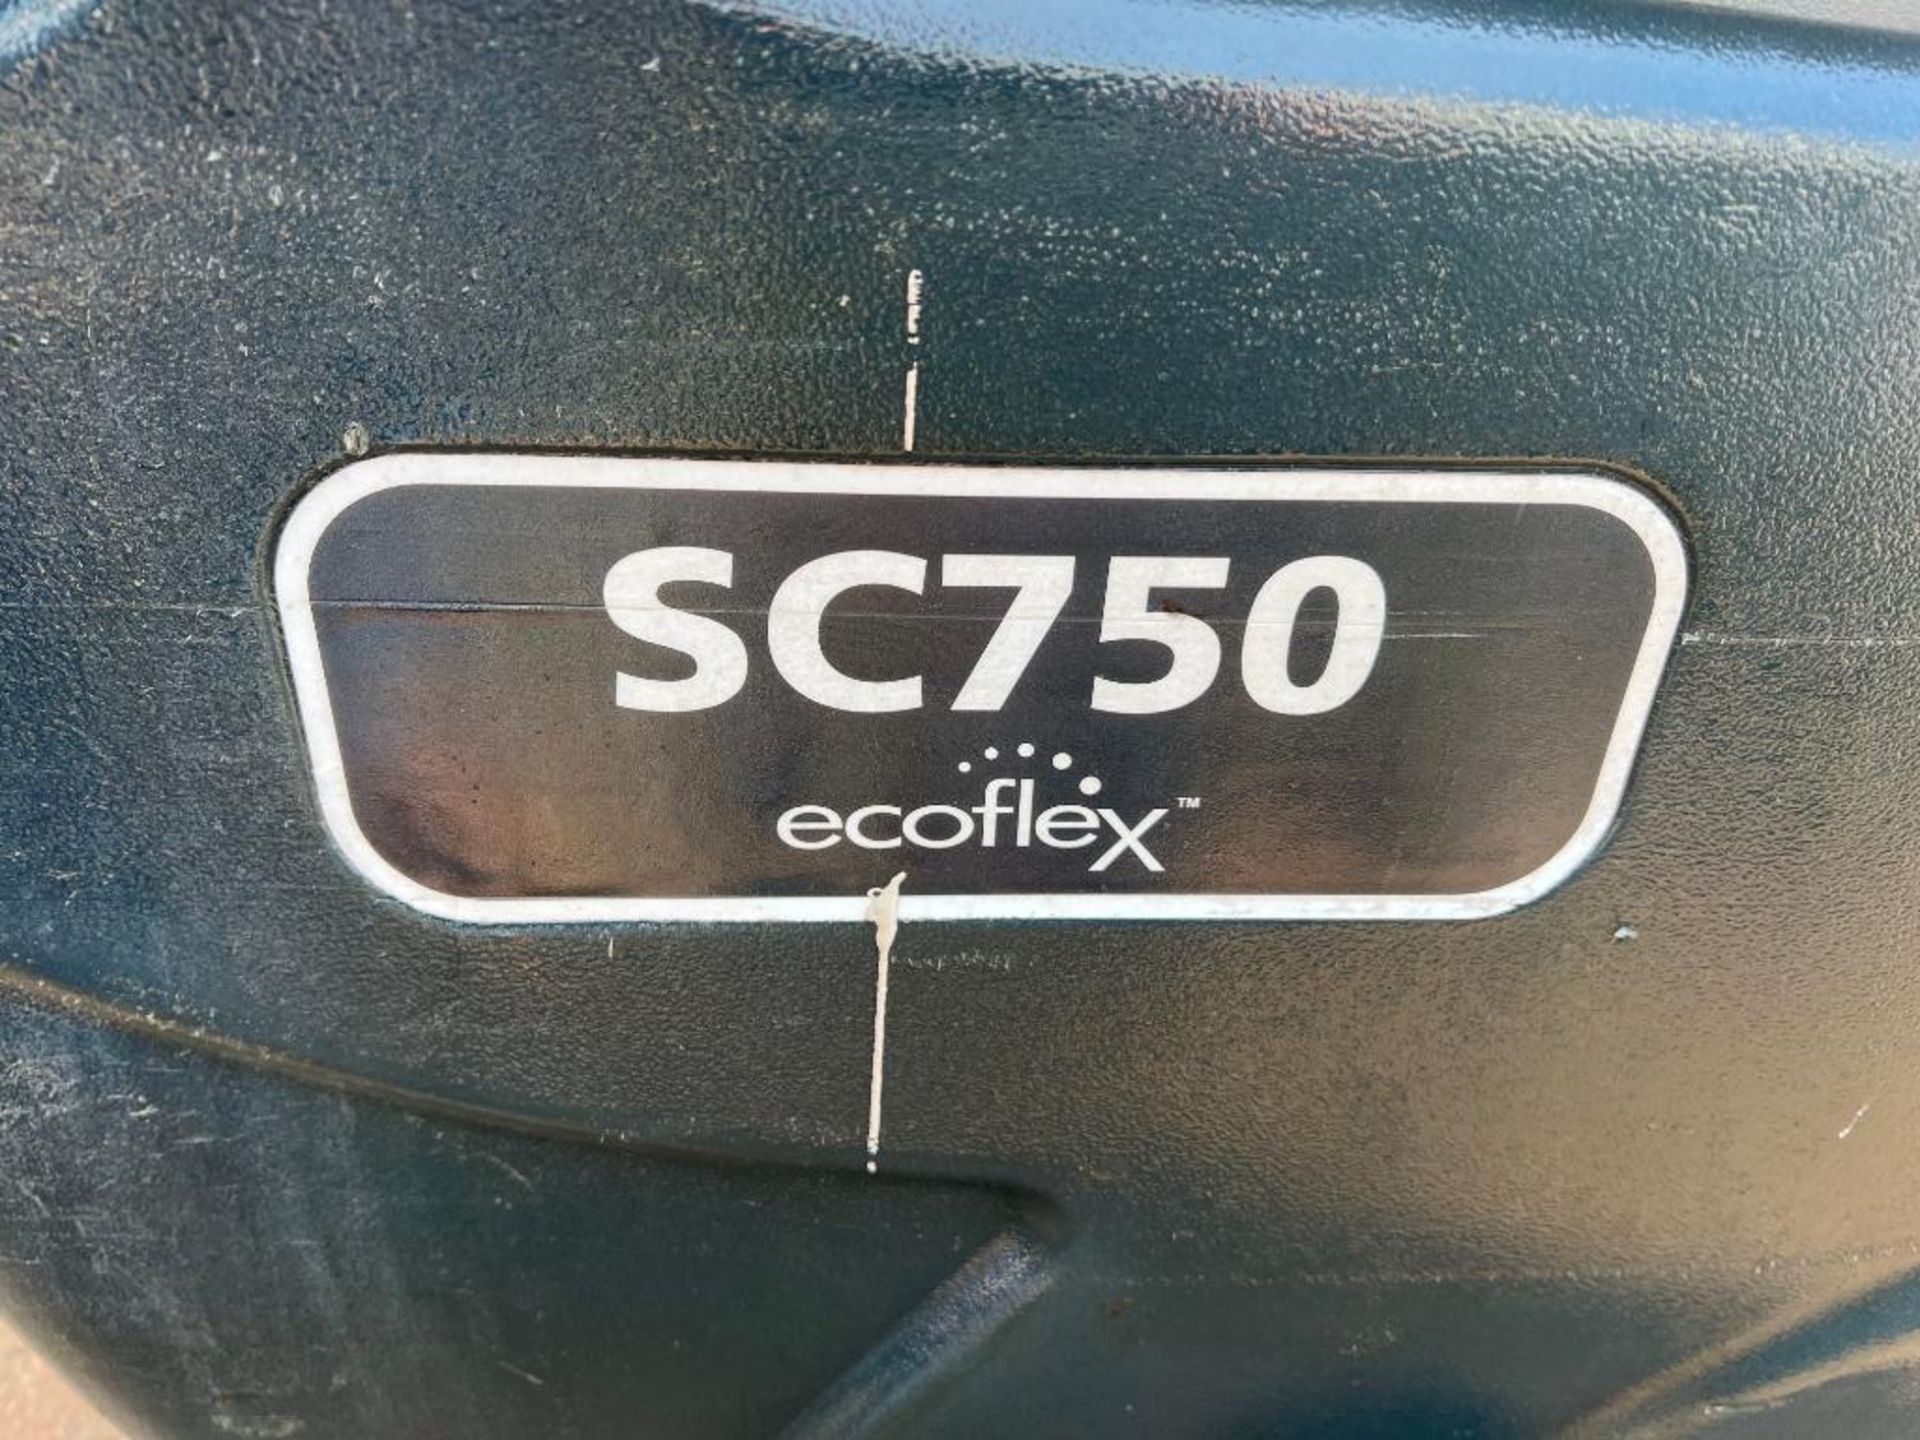 Advance SC750 Ecoflex Floor Scrubber, Model #SC750-26D, Serial #N4000032111, 24 V, Type E Floor Clea - Image 9 of 9